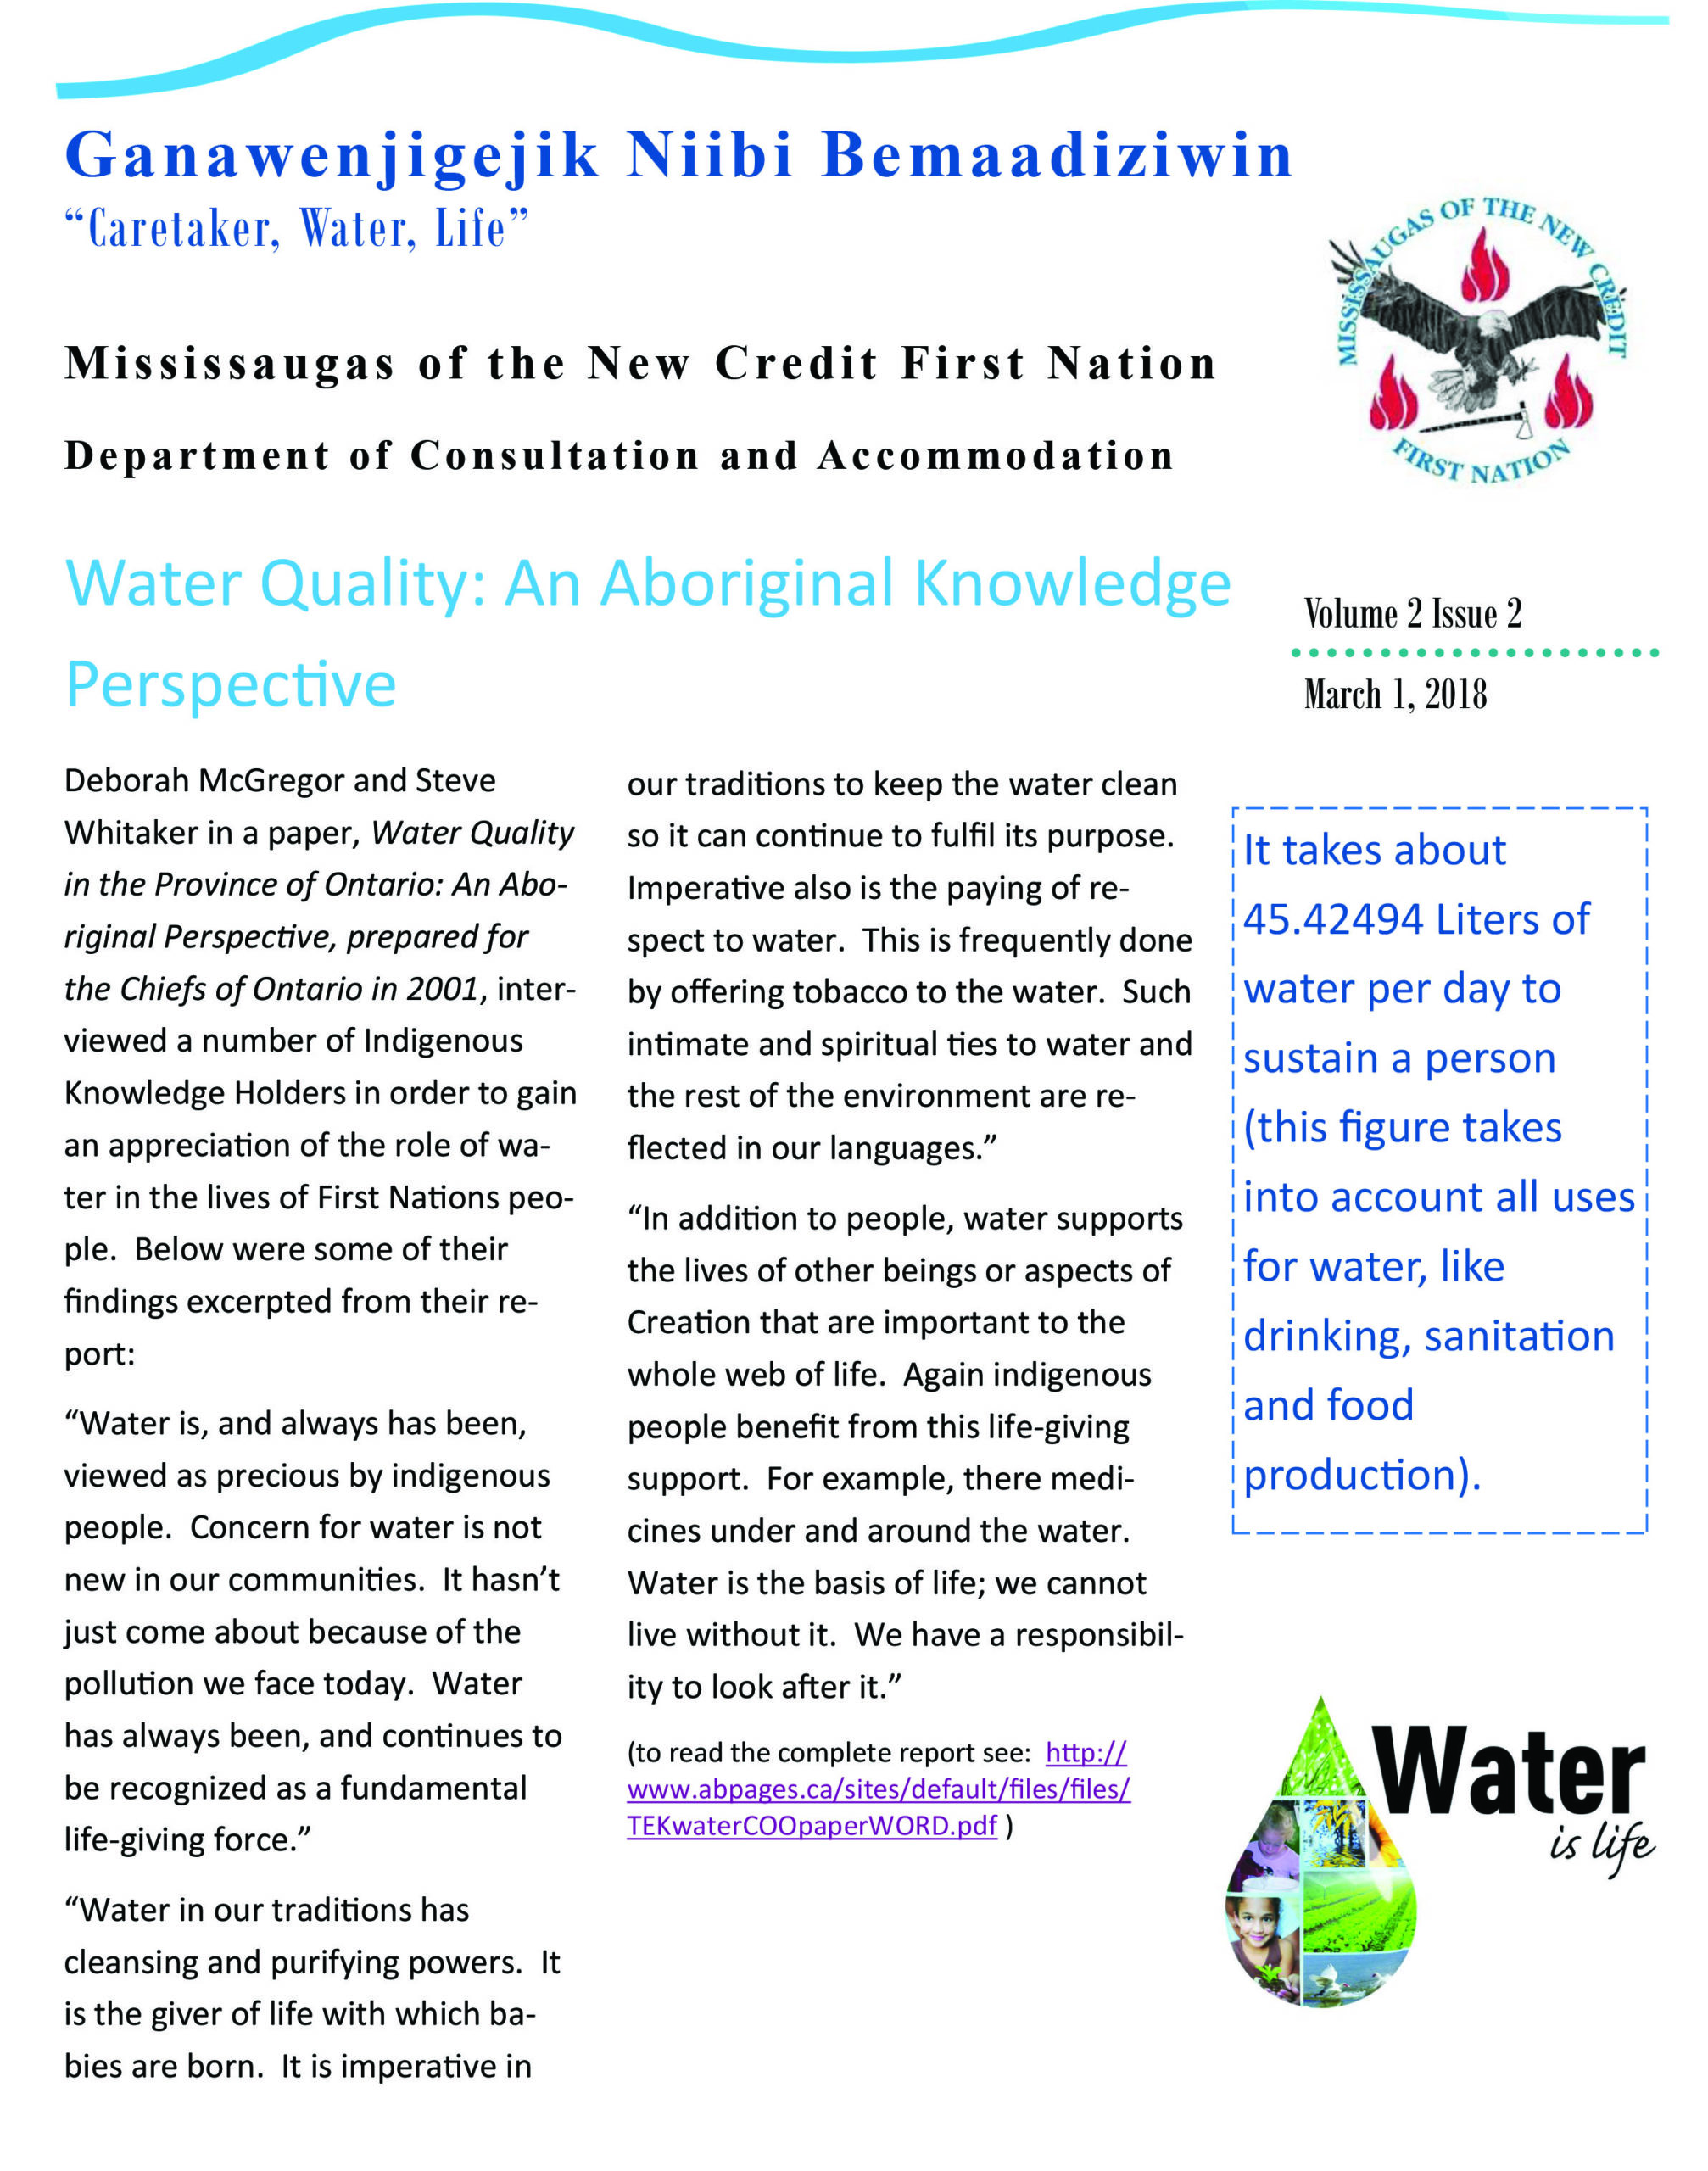 Ganawenjigejik Niibi Bemaadiziwin (MNCFN Water Committee) Newsletter